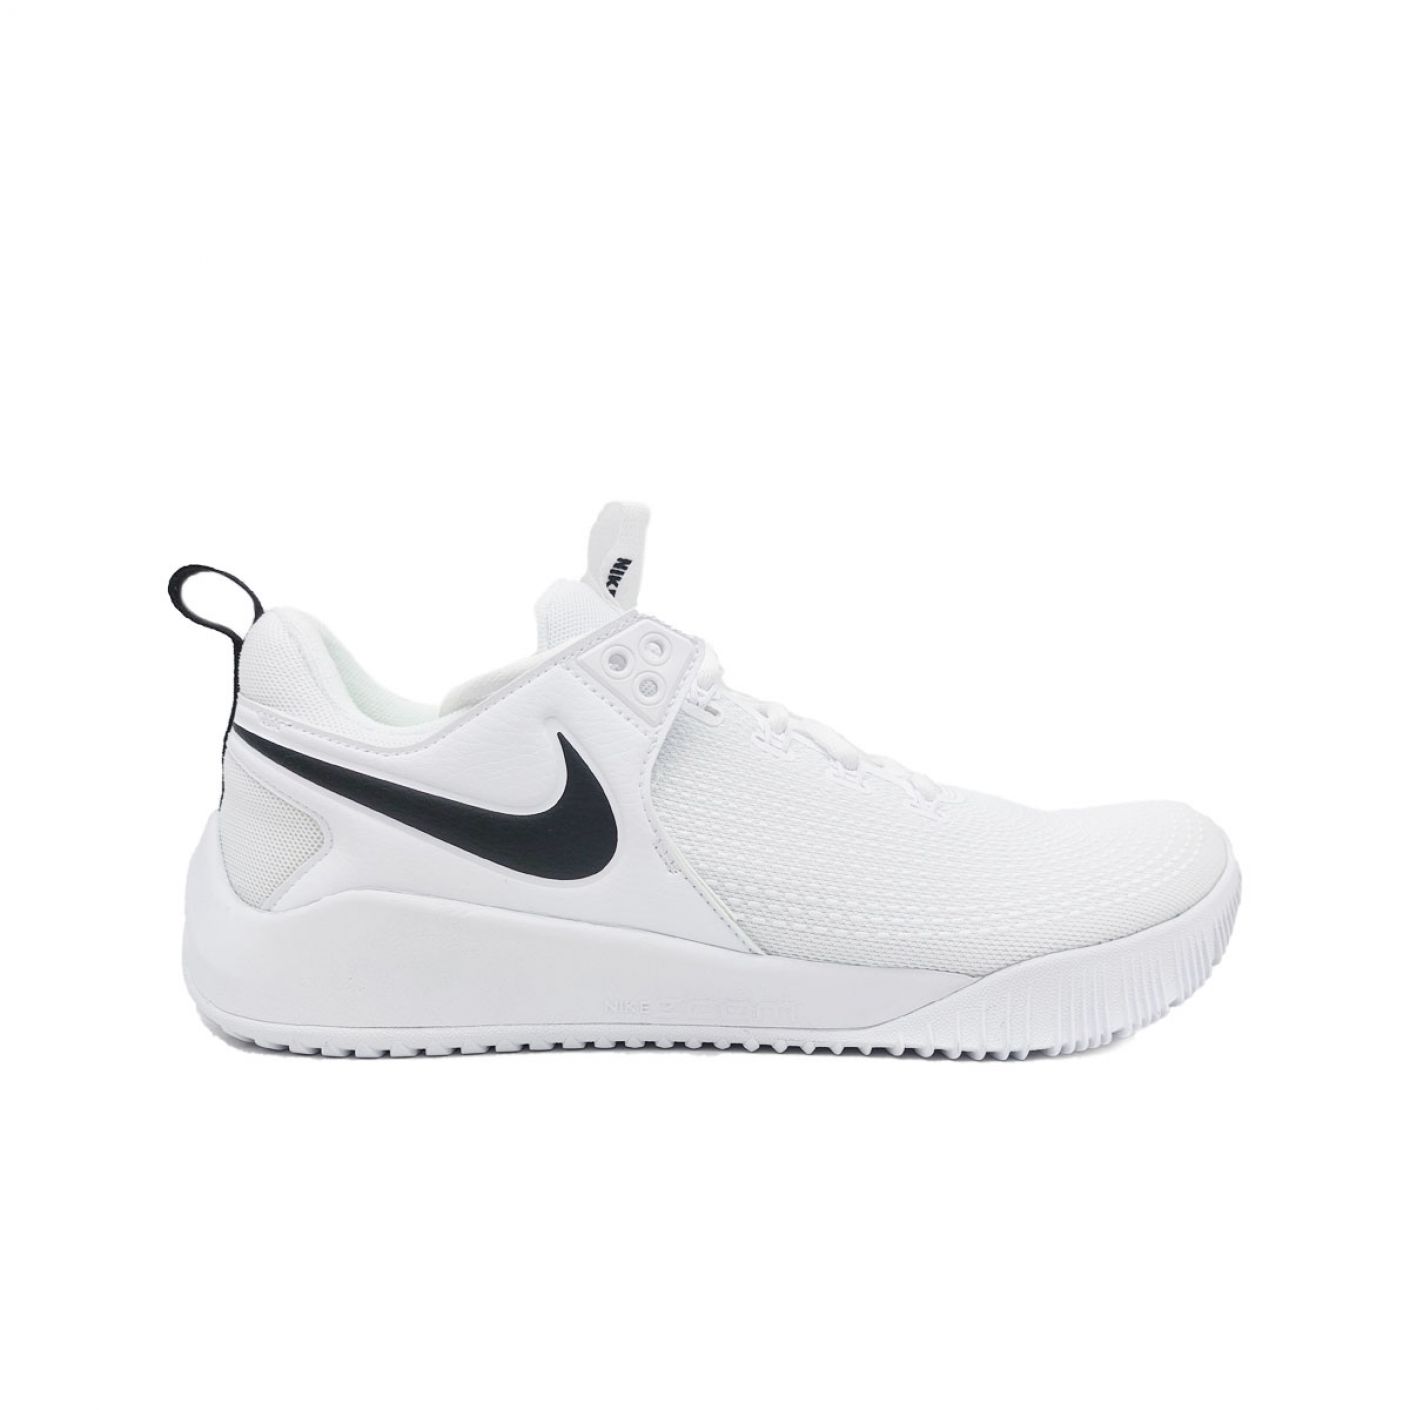 Nike Air Zoom Hyperace 2 White/Black